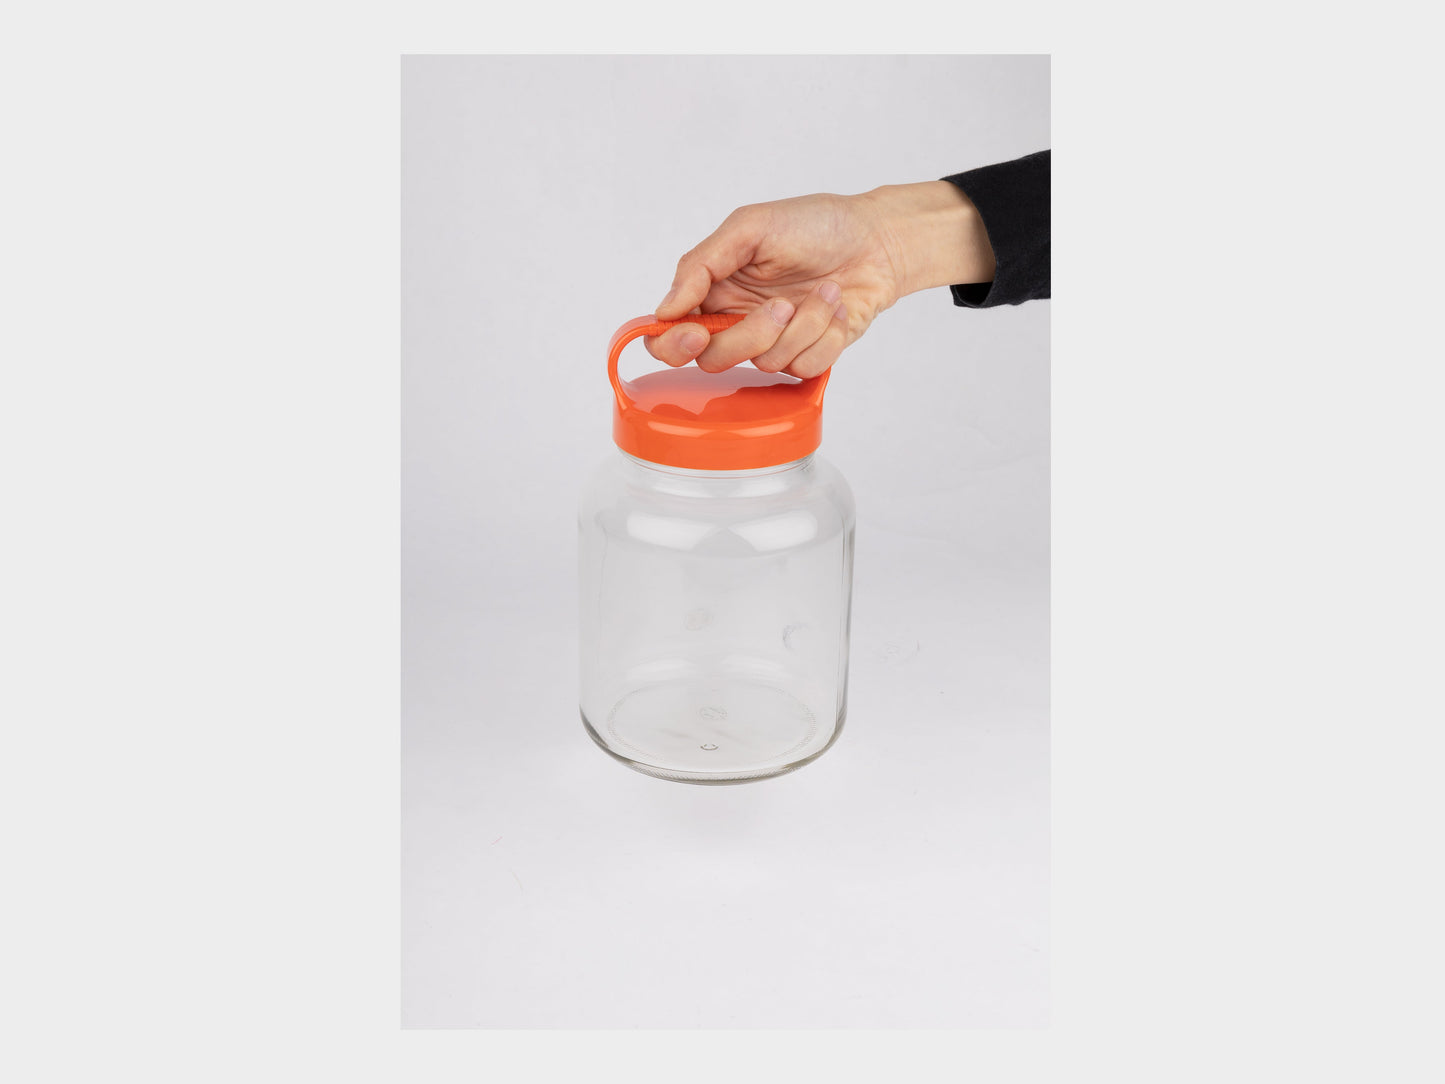 Okawa Glass Tesage Bottle White